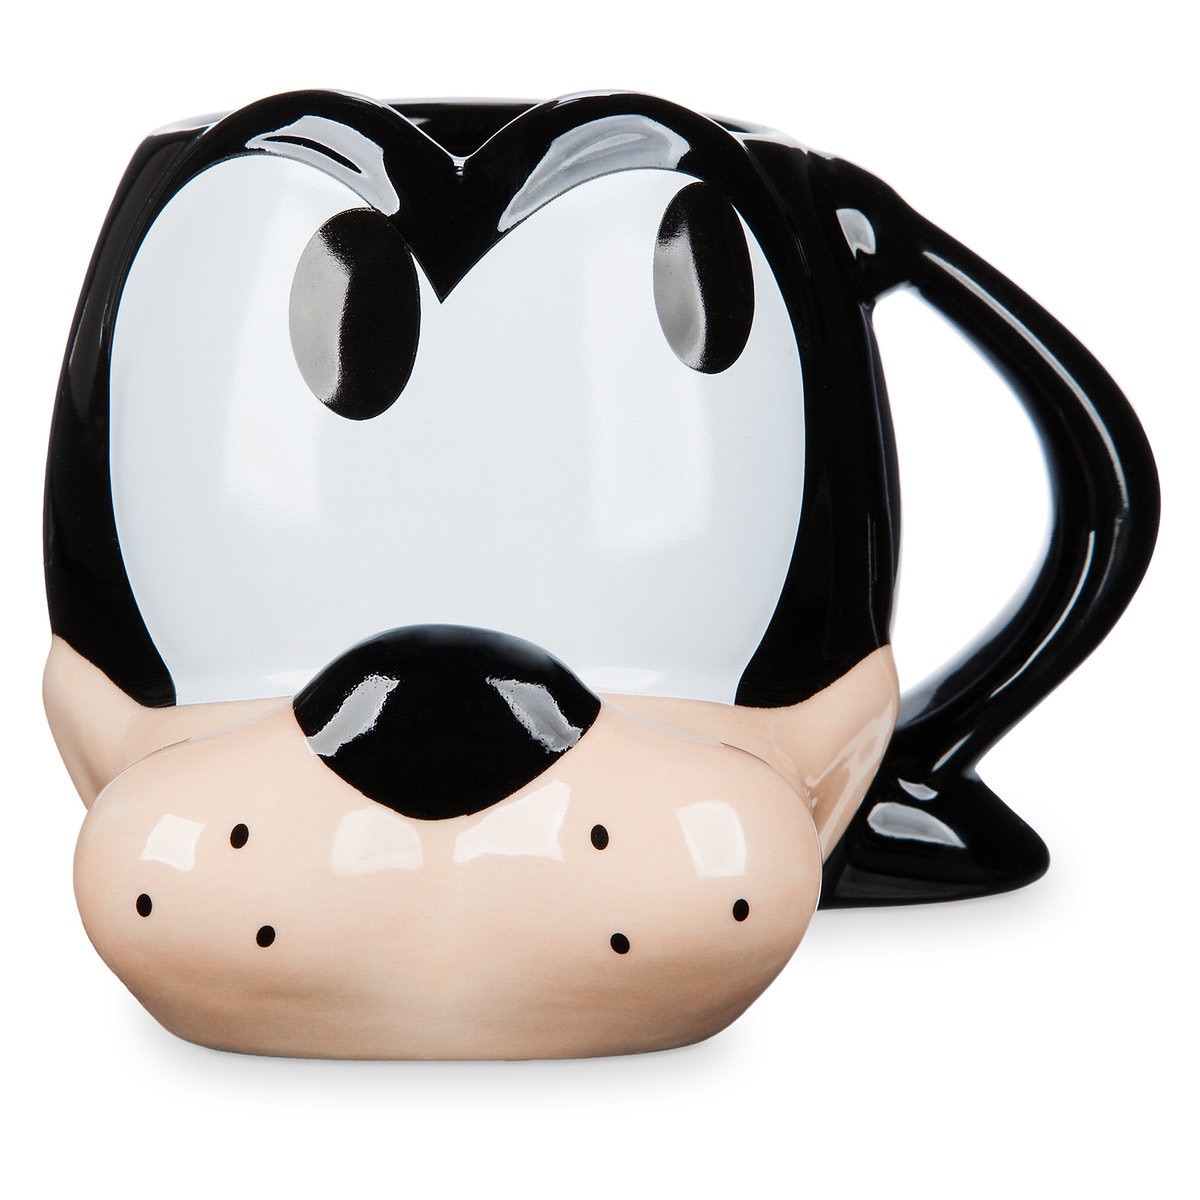 Goofy Figural Mug | shopDisney
高飞水杯